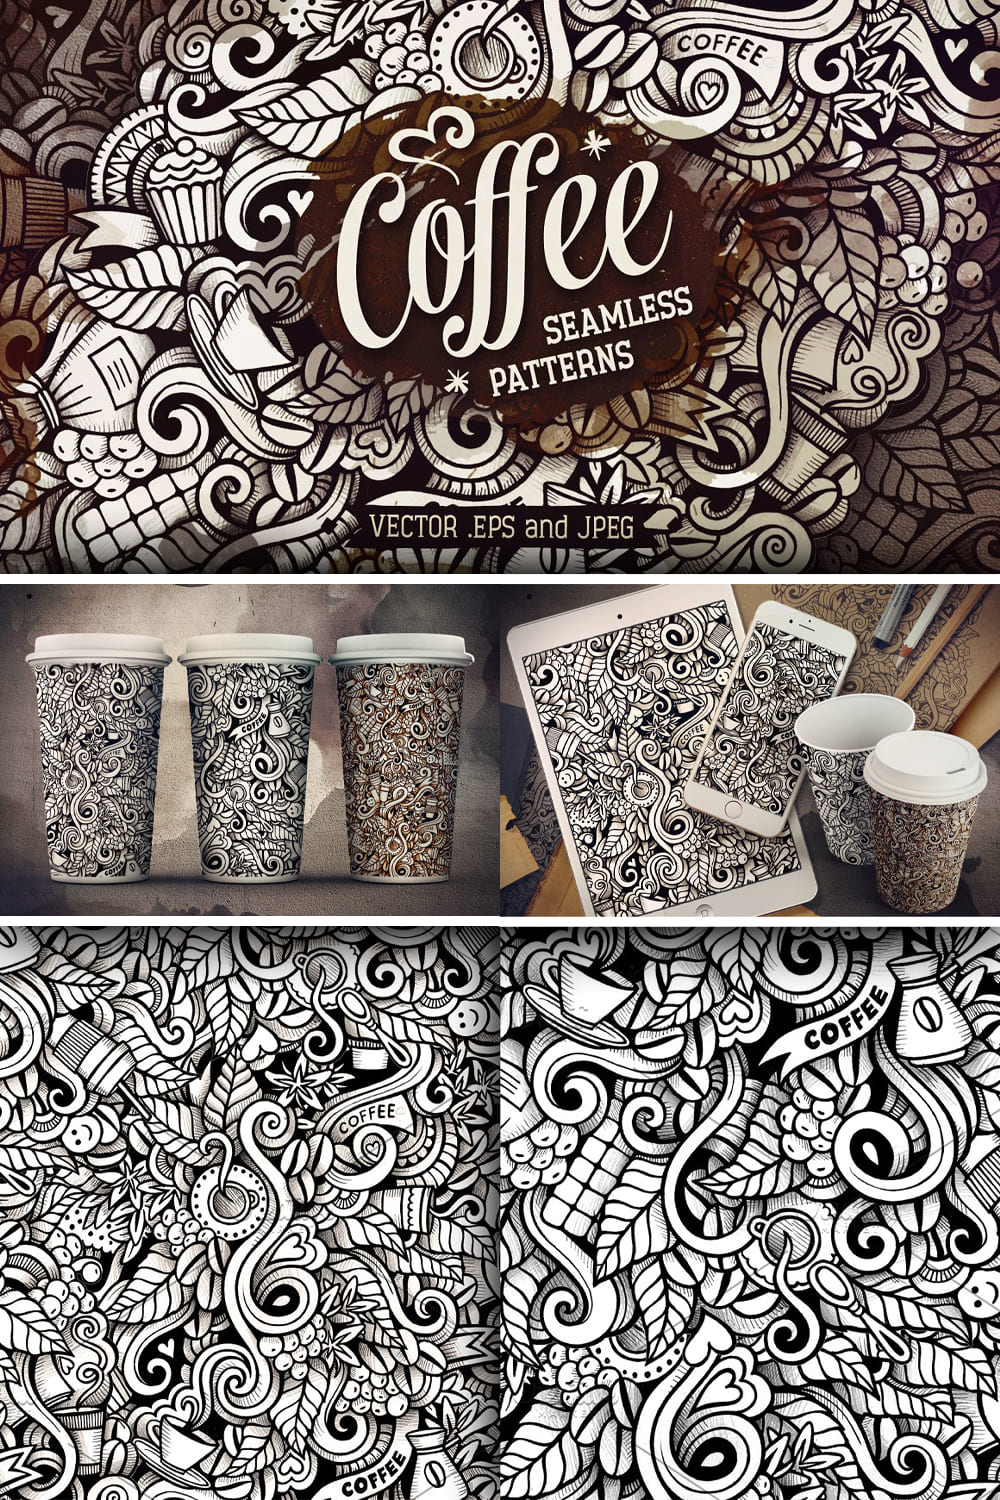 Coffee Graphics Patterns Pinterest 1000 1500 1.